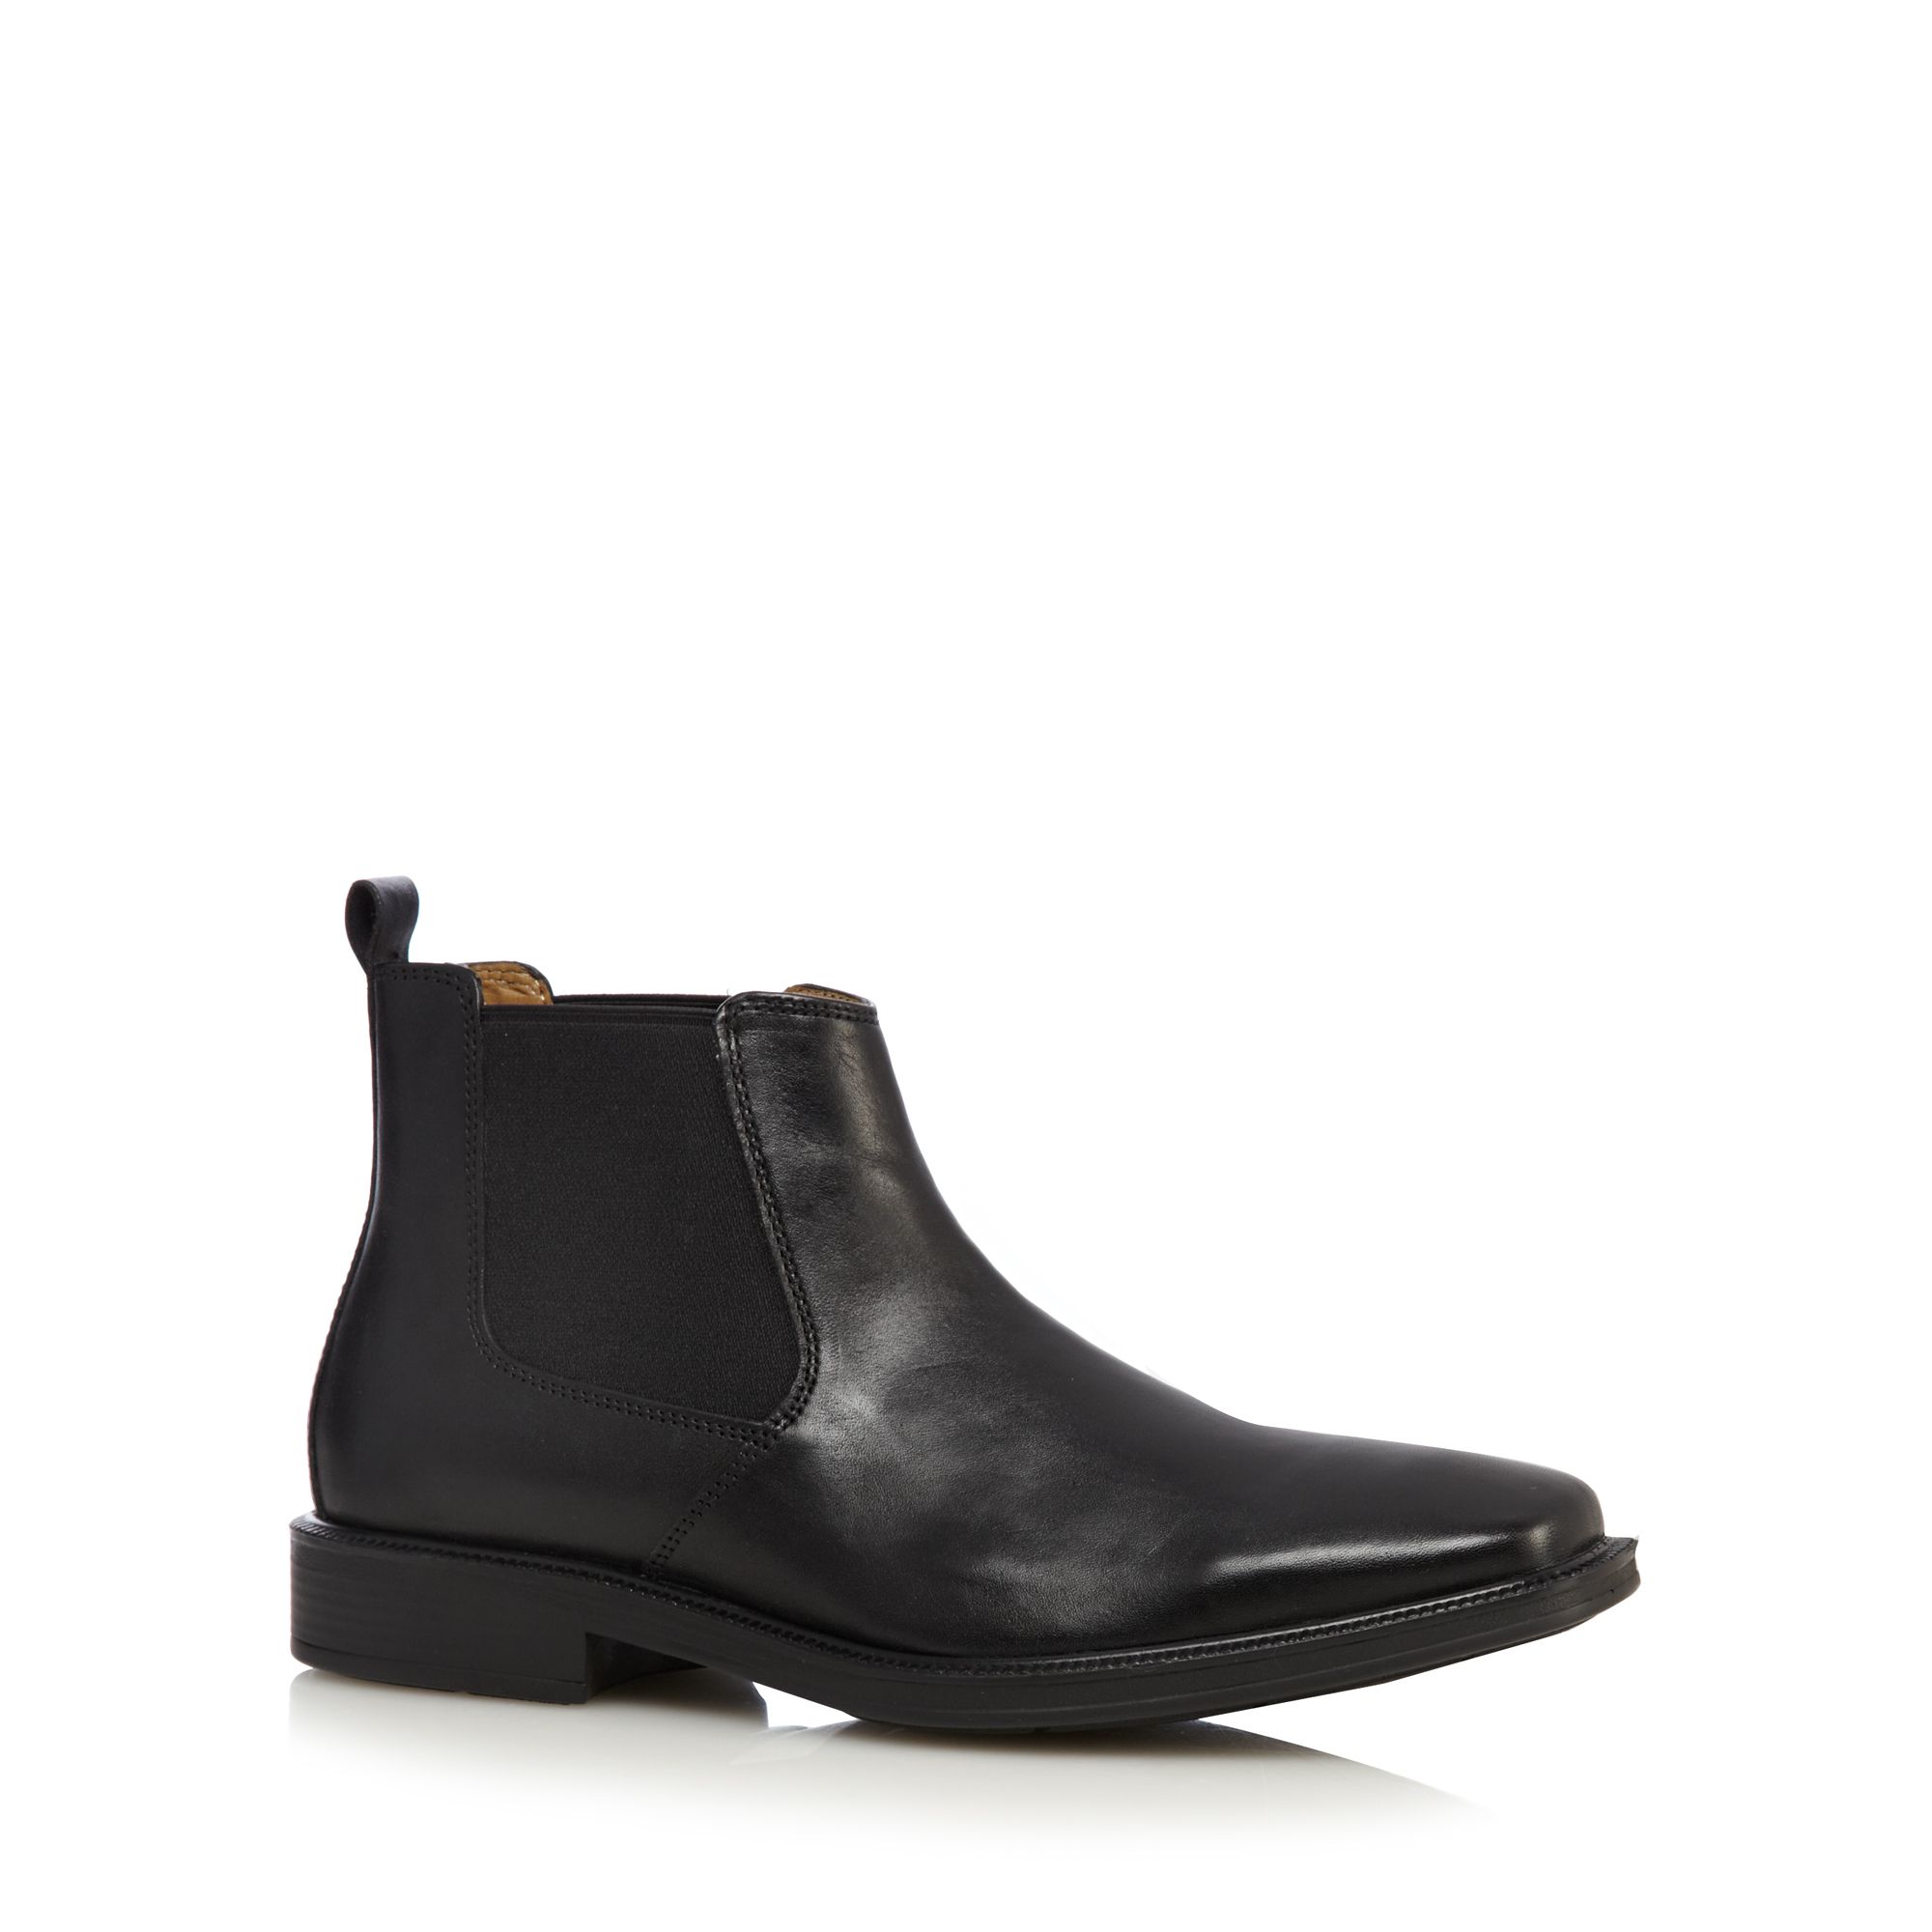 Henley Comfort Mens Black Leather Chelsea Boots From Debenhams | eBay